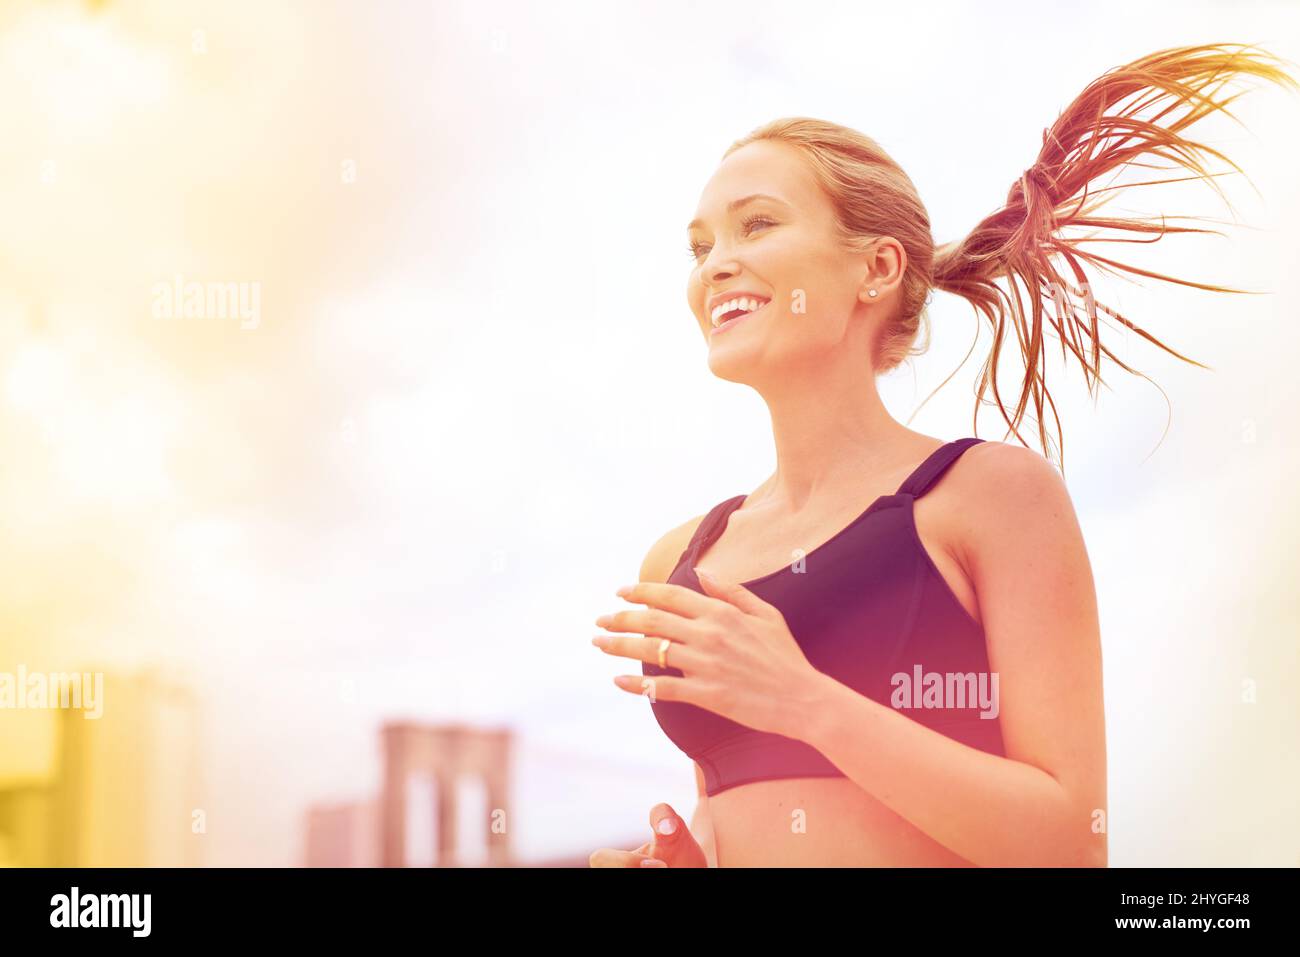 https://c8.alamy.com/comp/2HYGF48/jog-for-joy-shot-of-an-attractive-blonde-woman-jogging-in-the-city-2HYGF48.jpg